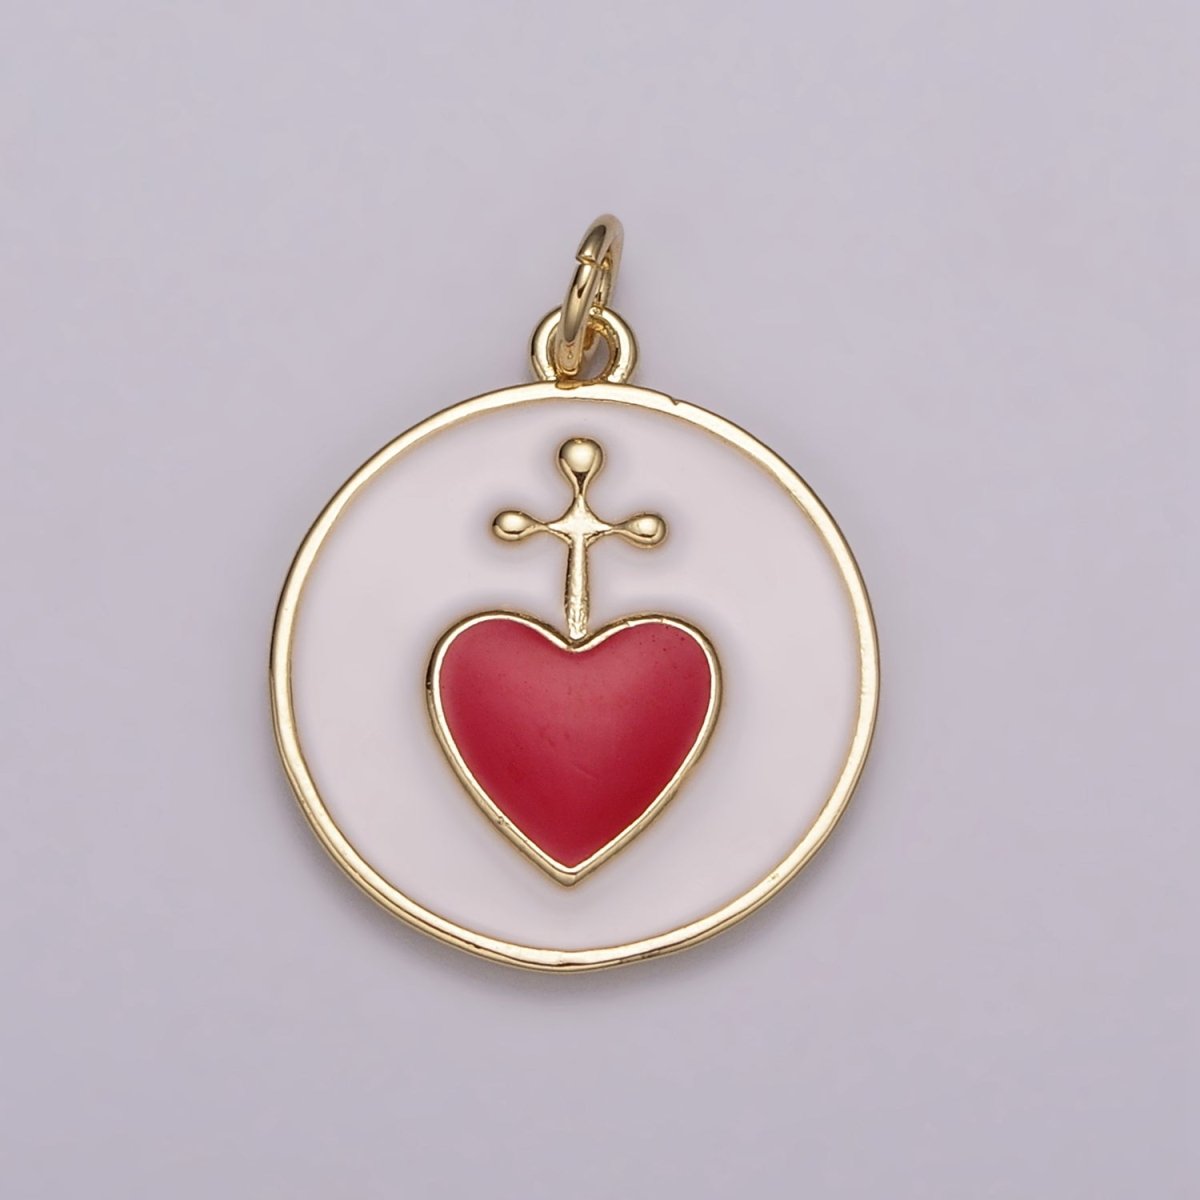 Enamel Heart Cross Pendant, Earrings pendant, Bracelet Charm, Necklace Pendant Green White Black Pink Religious jewelry making E-615-E-618 - DLUXCA